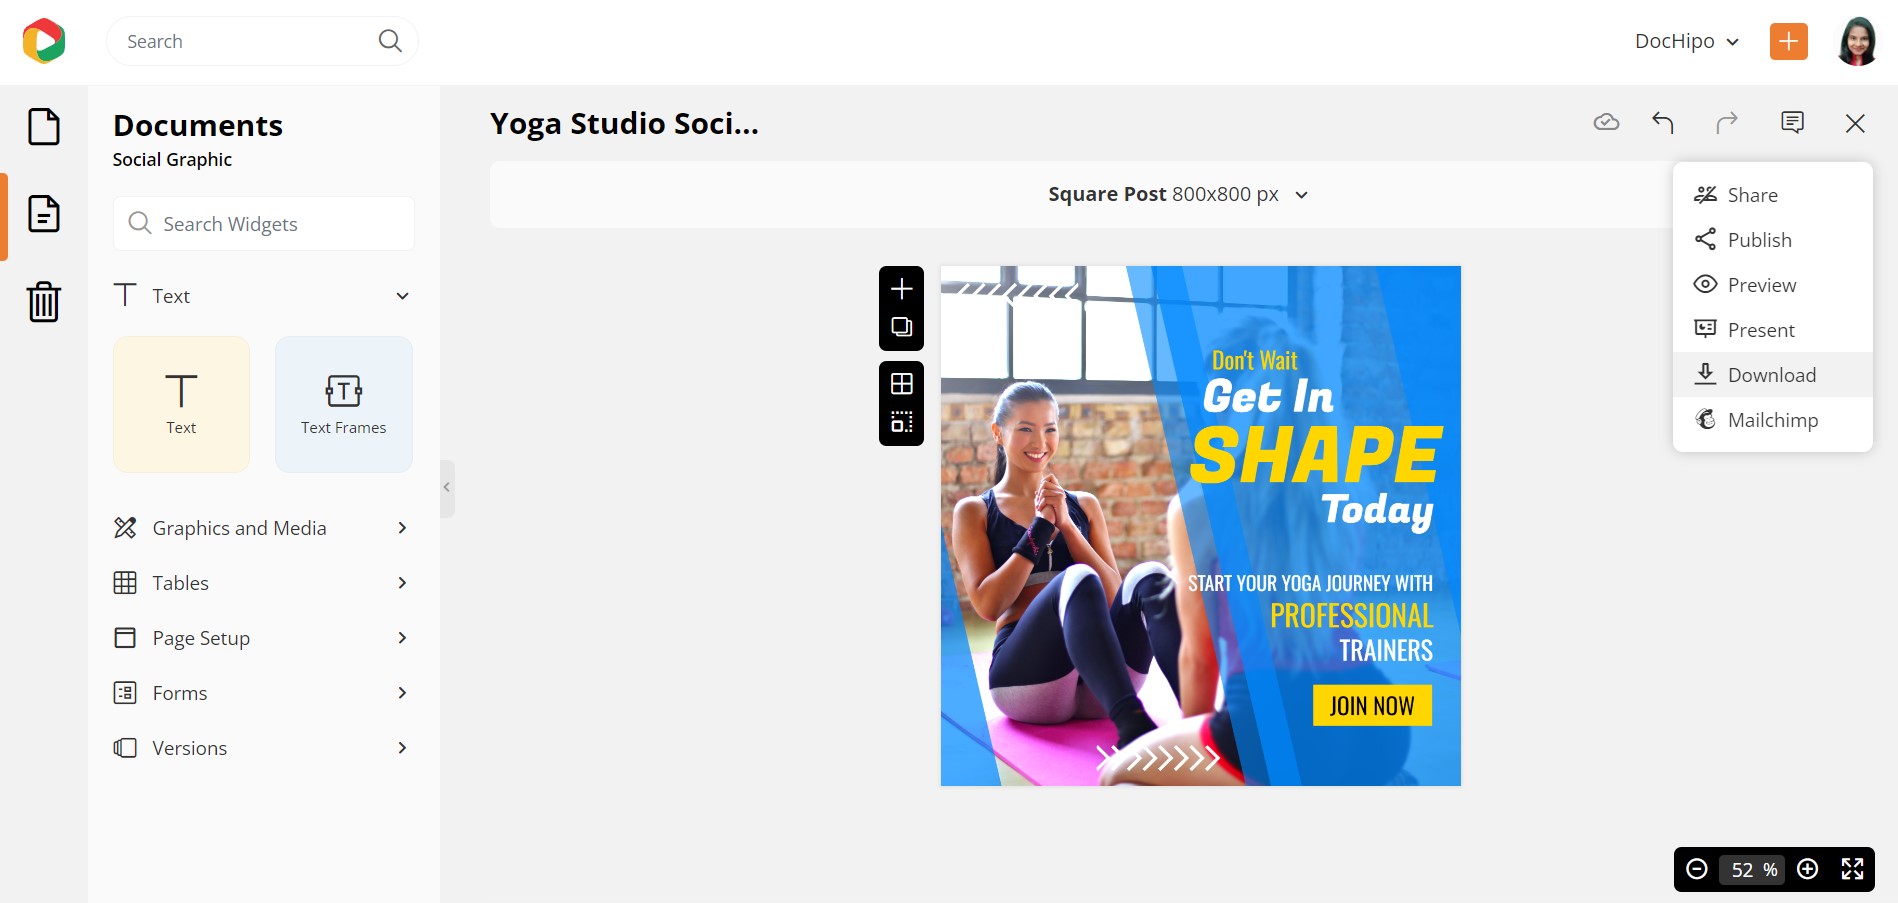 Download Yoga Studio Social Media Marketing Design